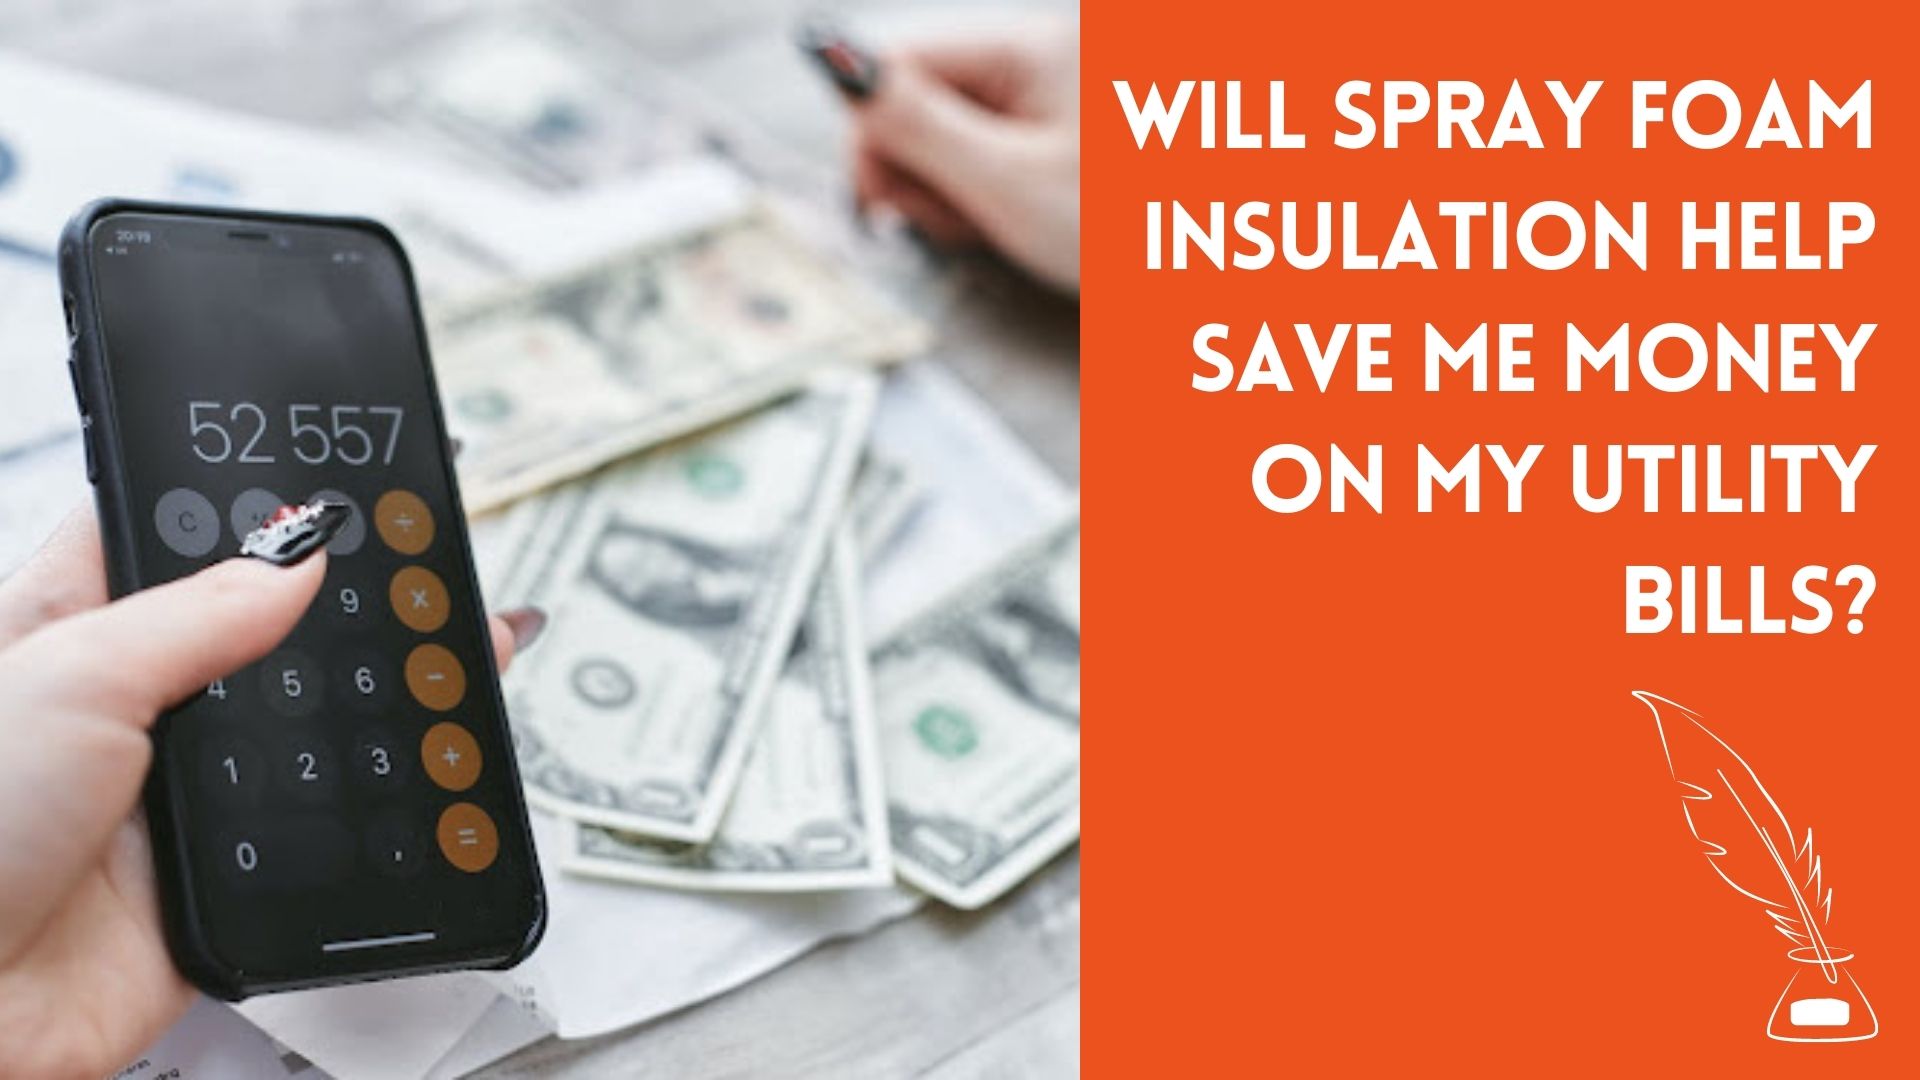 Will spray foam insulation help save me money on my utility bills?